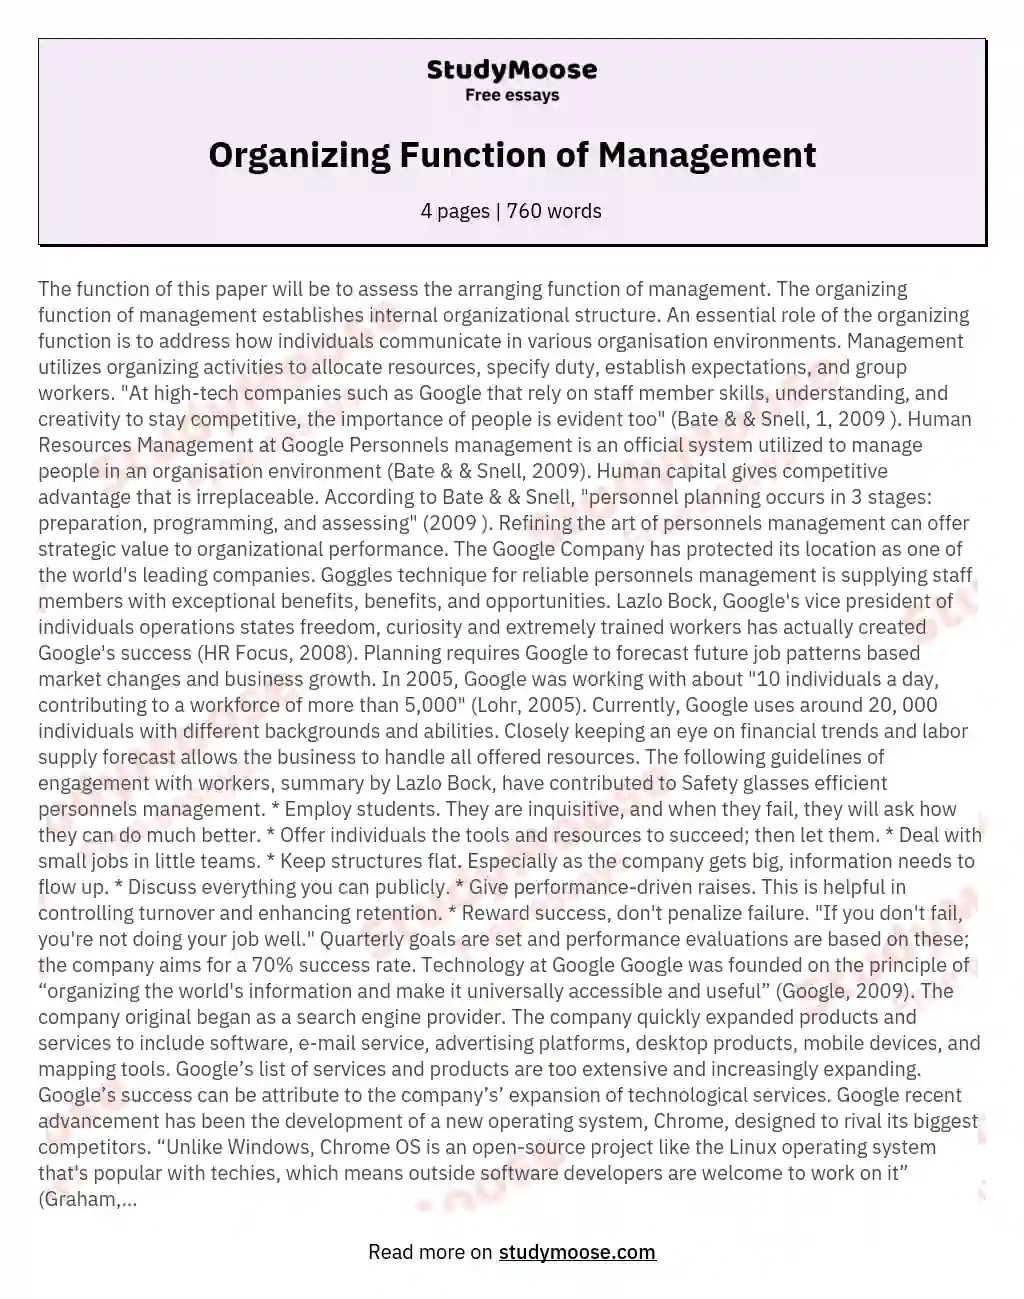 Organizing Function of Management essay